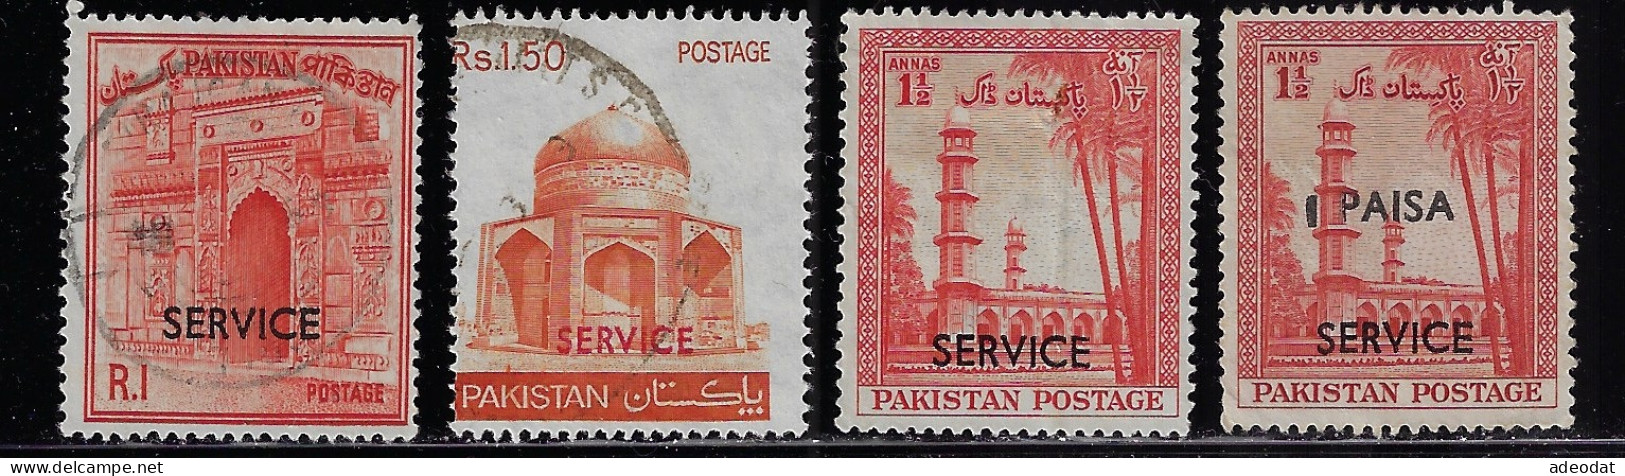 PAKISTAN  1961  SERVICE  SCOTT # O76,O79,O82  MNH. CV $0.80 - Pakistán